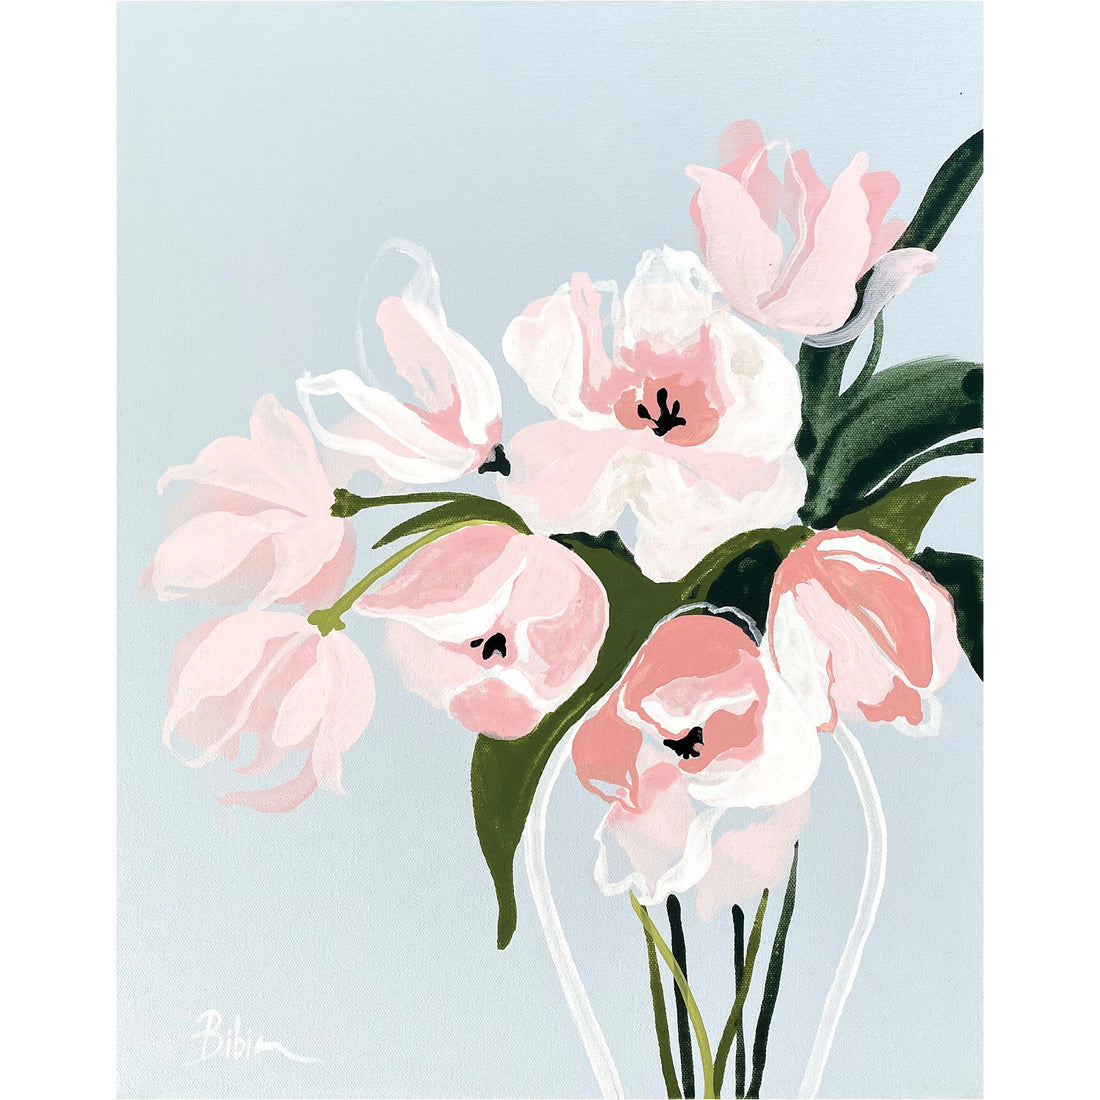 Bibiana Hooper "Solari 5" floral abstract painting Canadian artist Kefi Art Gallery